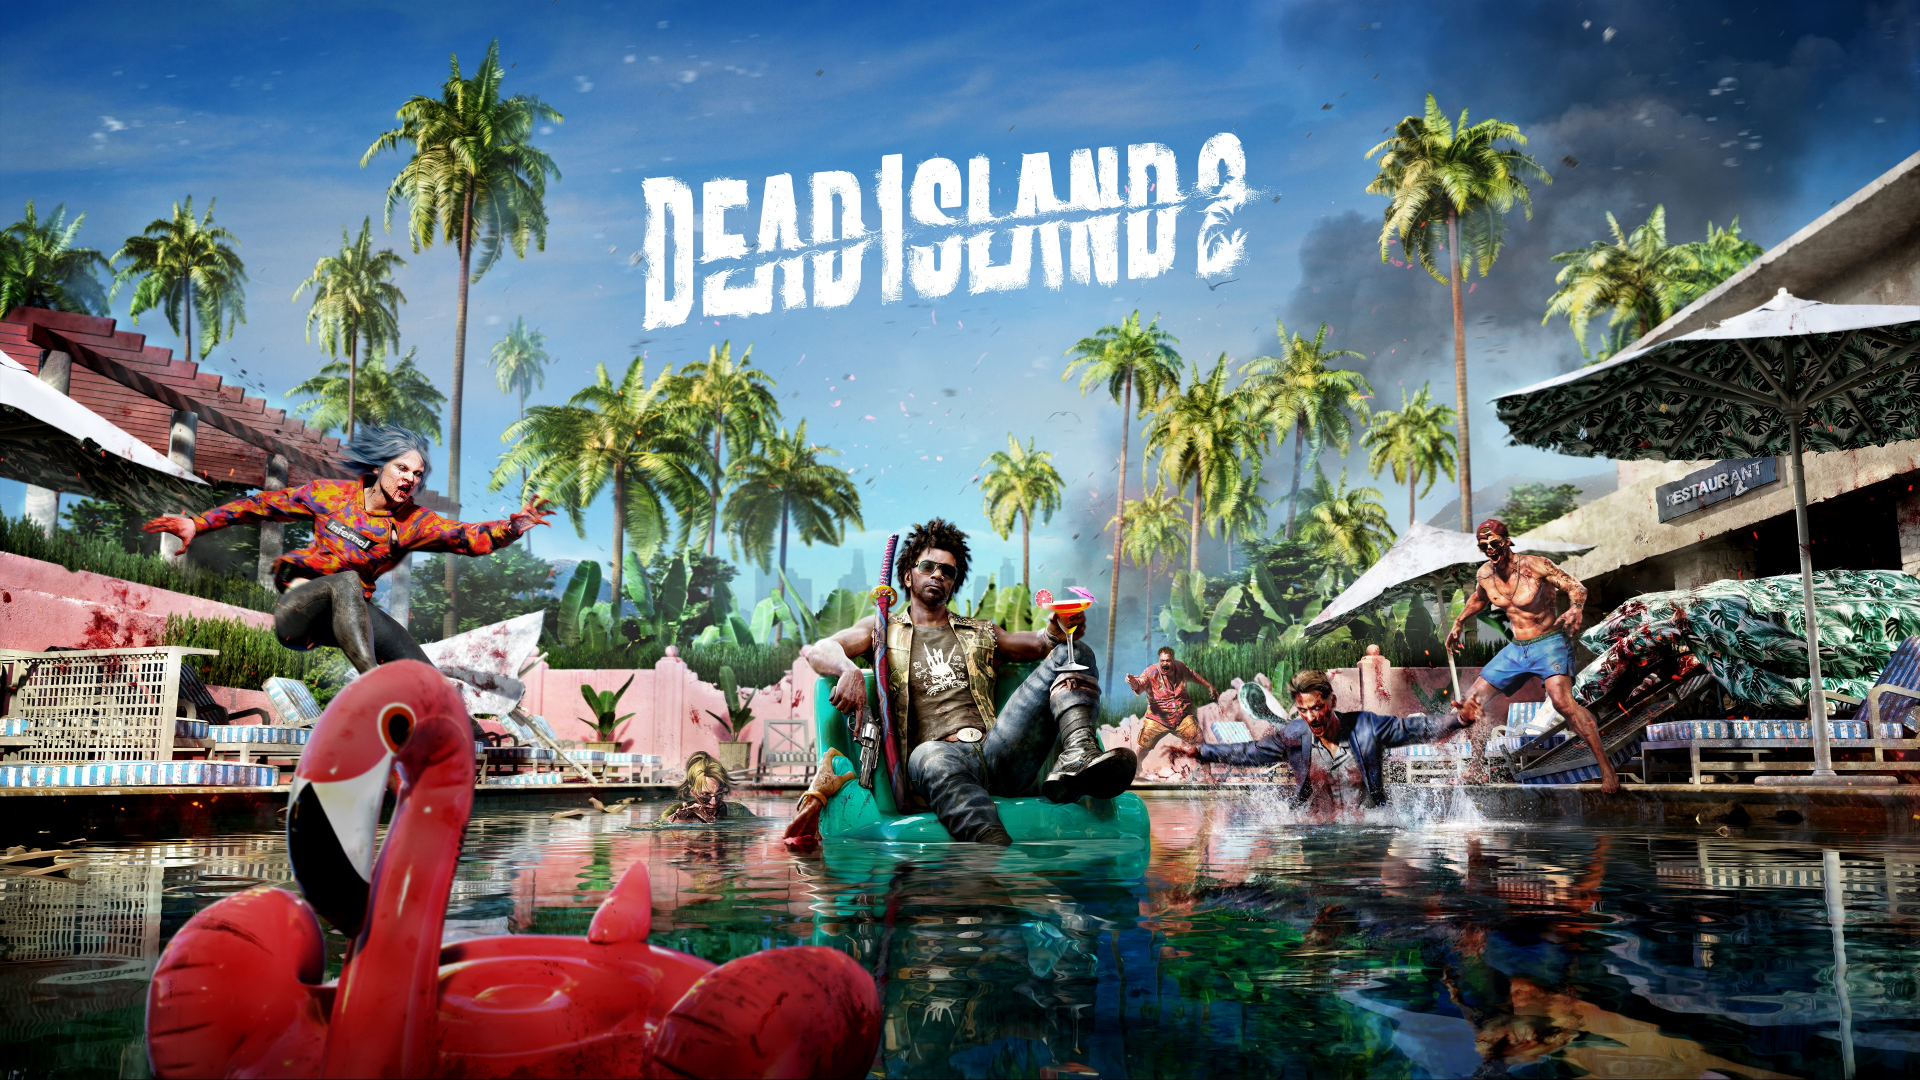 Dead Island 2, Performance & Best Settings, Steam OS